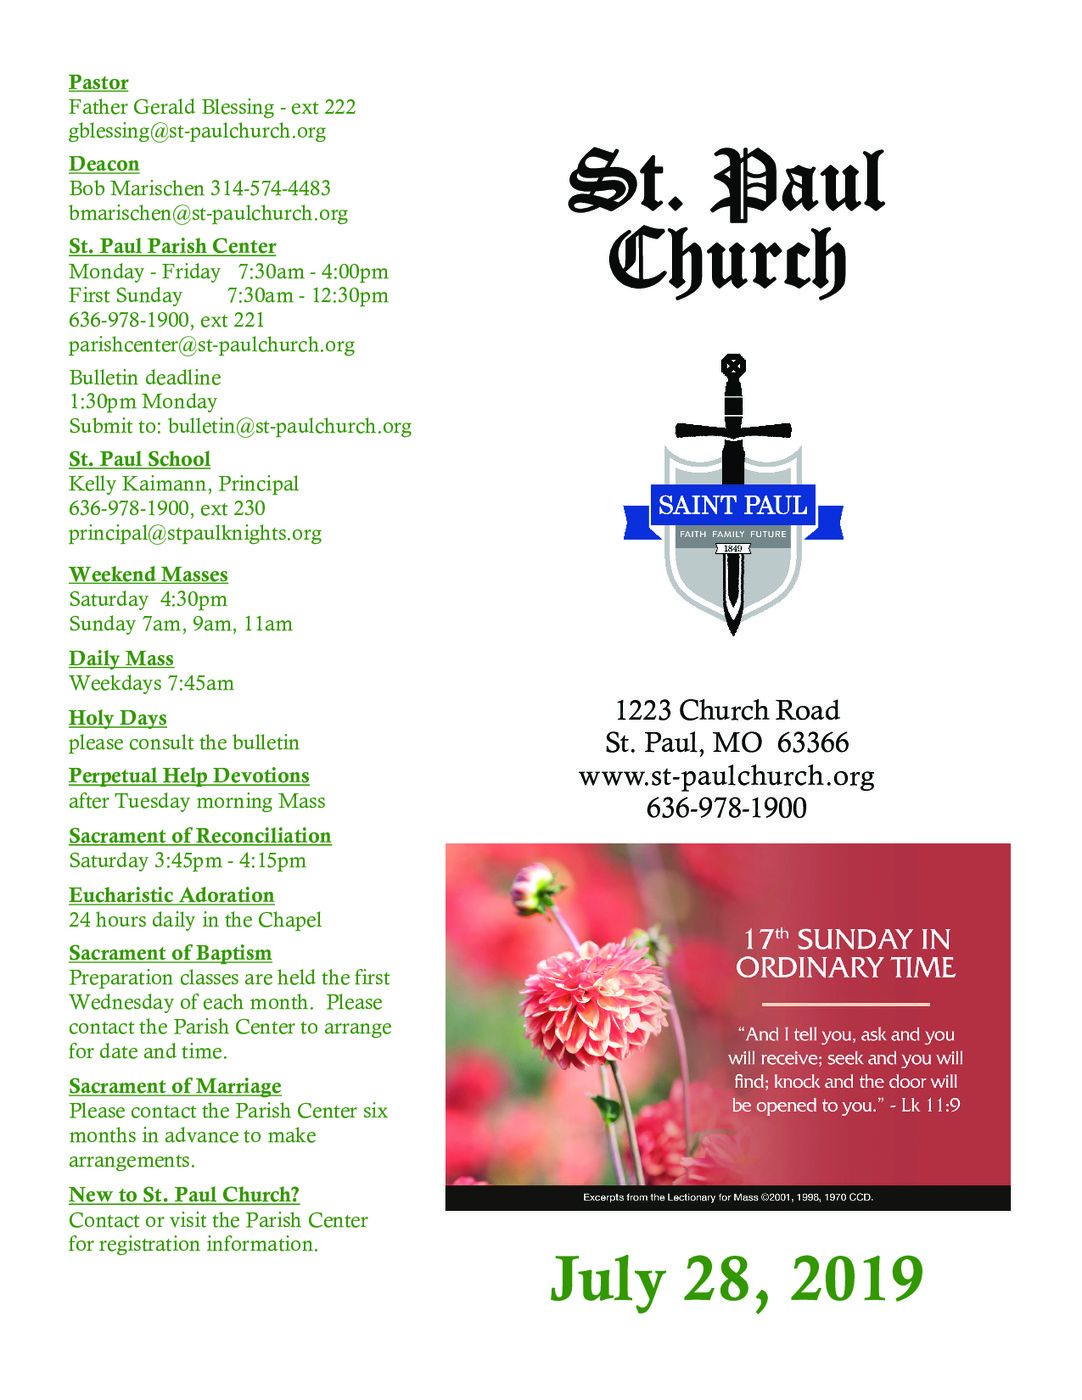 Top St Paul Catholic Church Bulletin of the decade Access here!